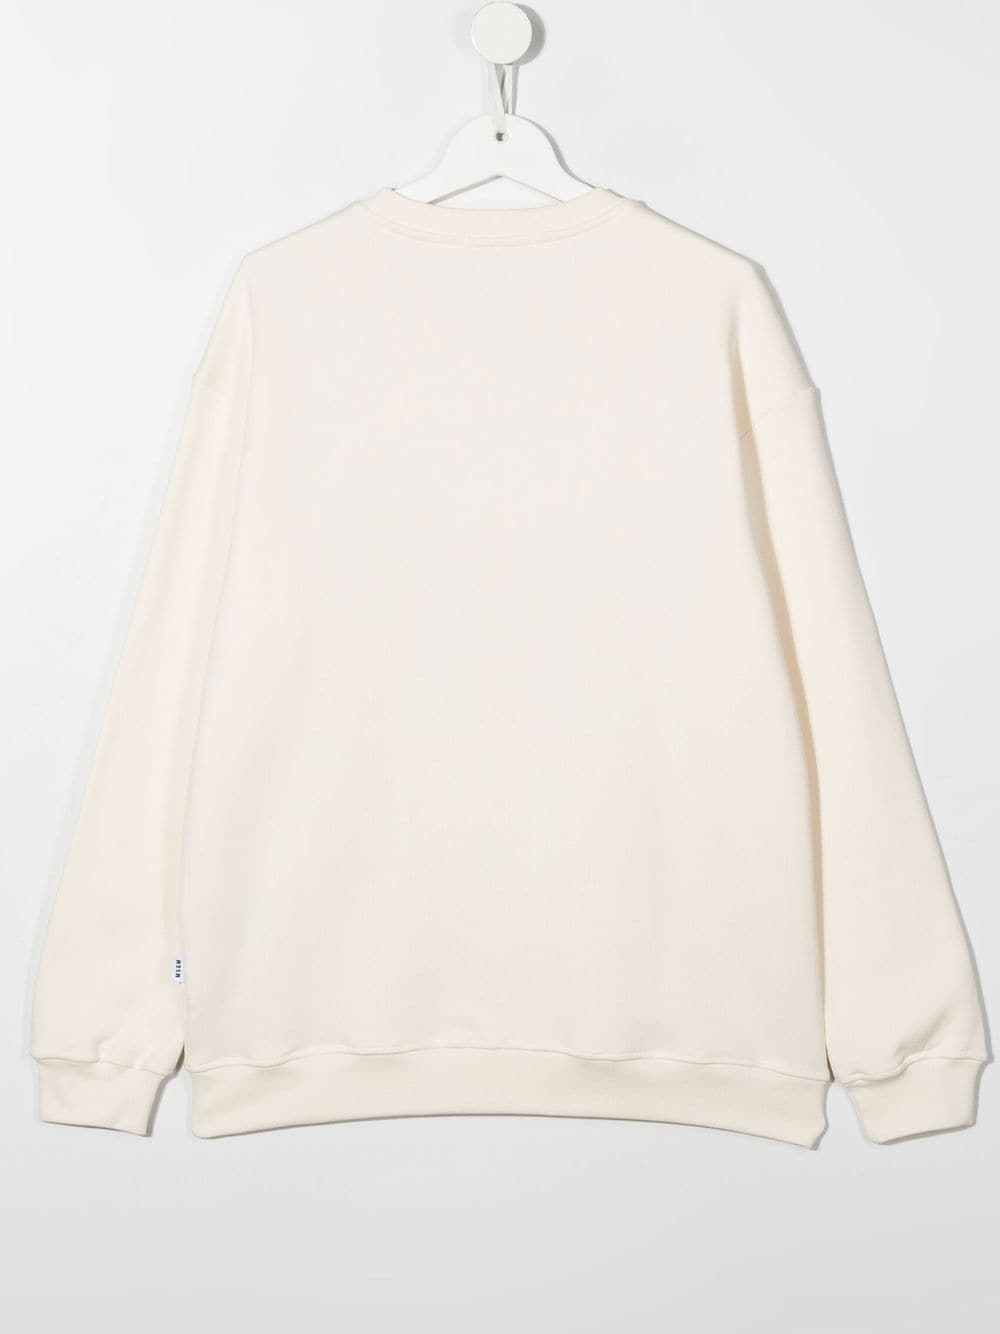 Sweatshirt teen boy cream white